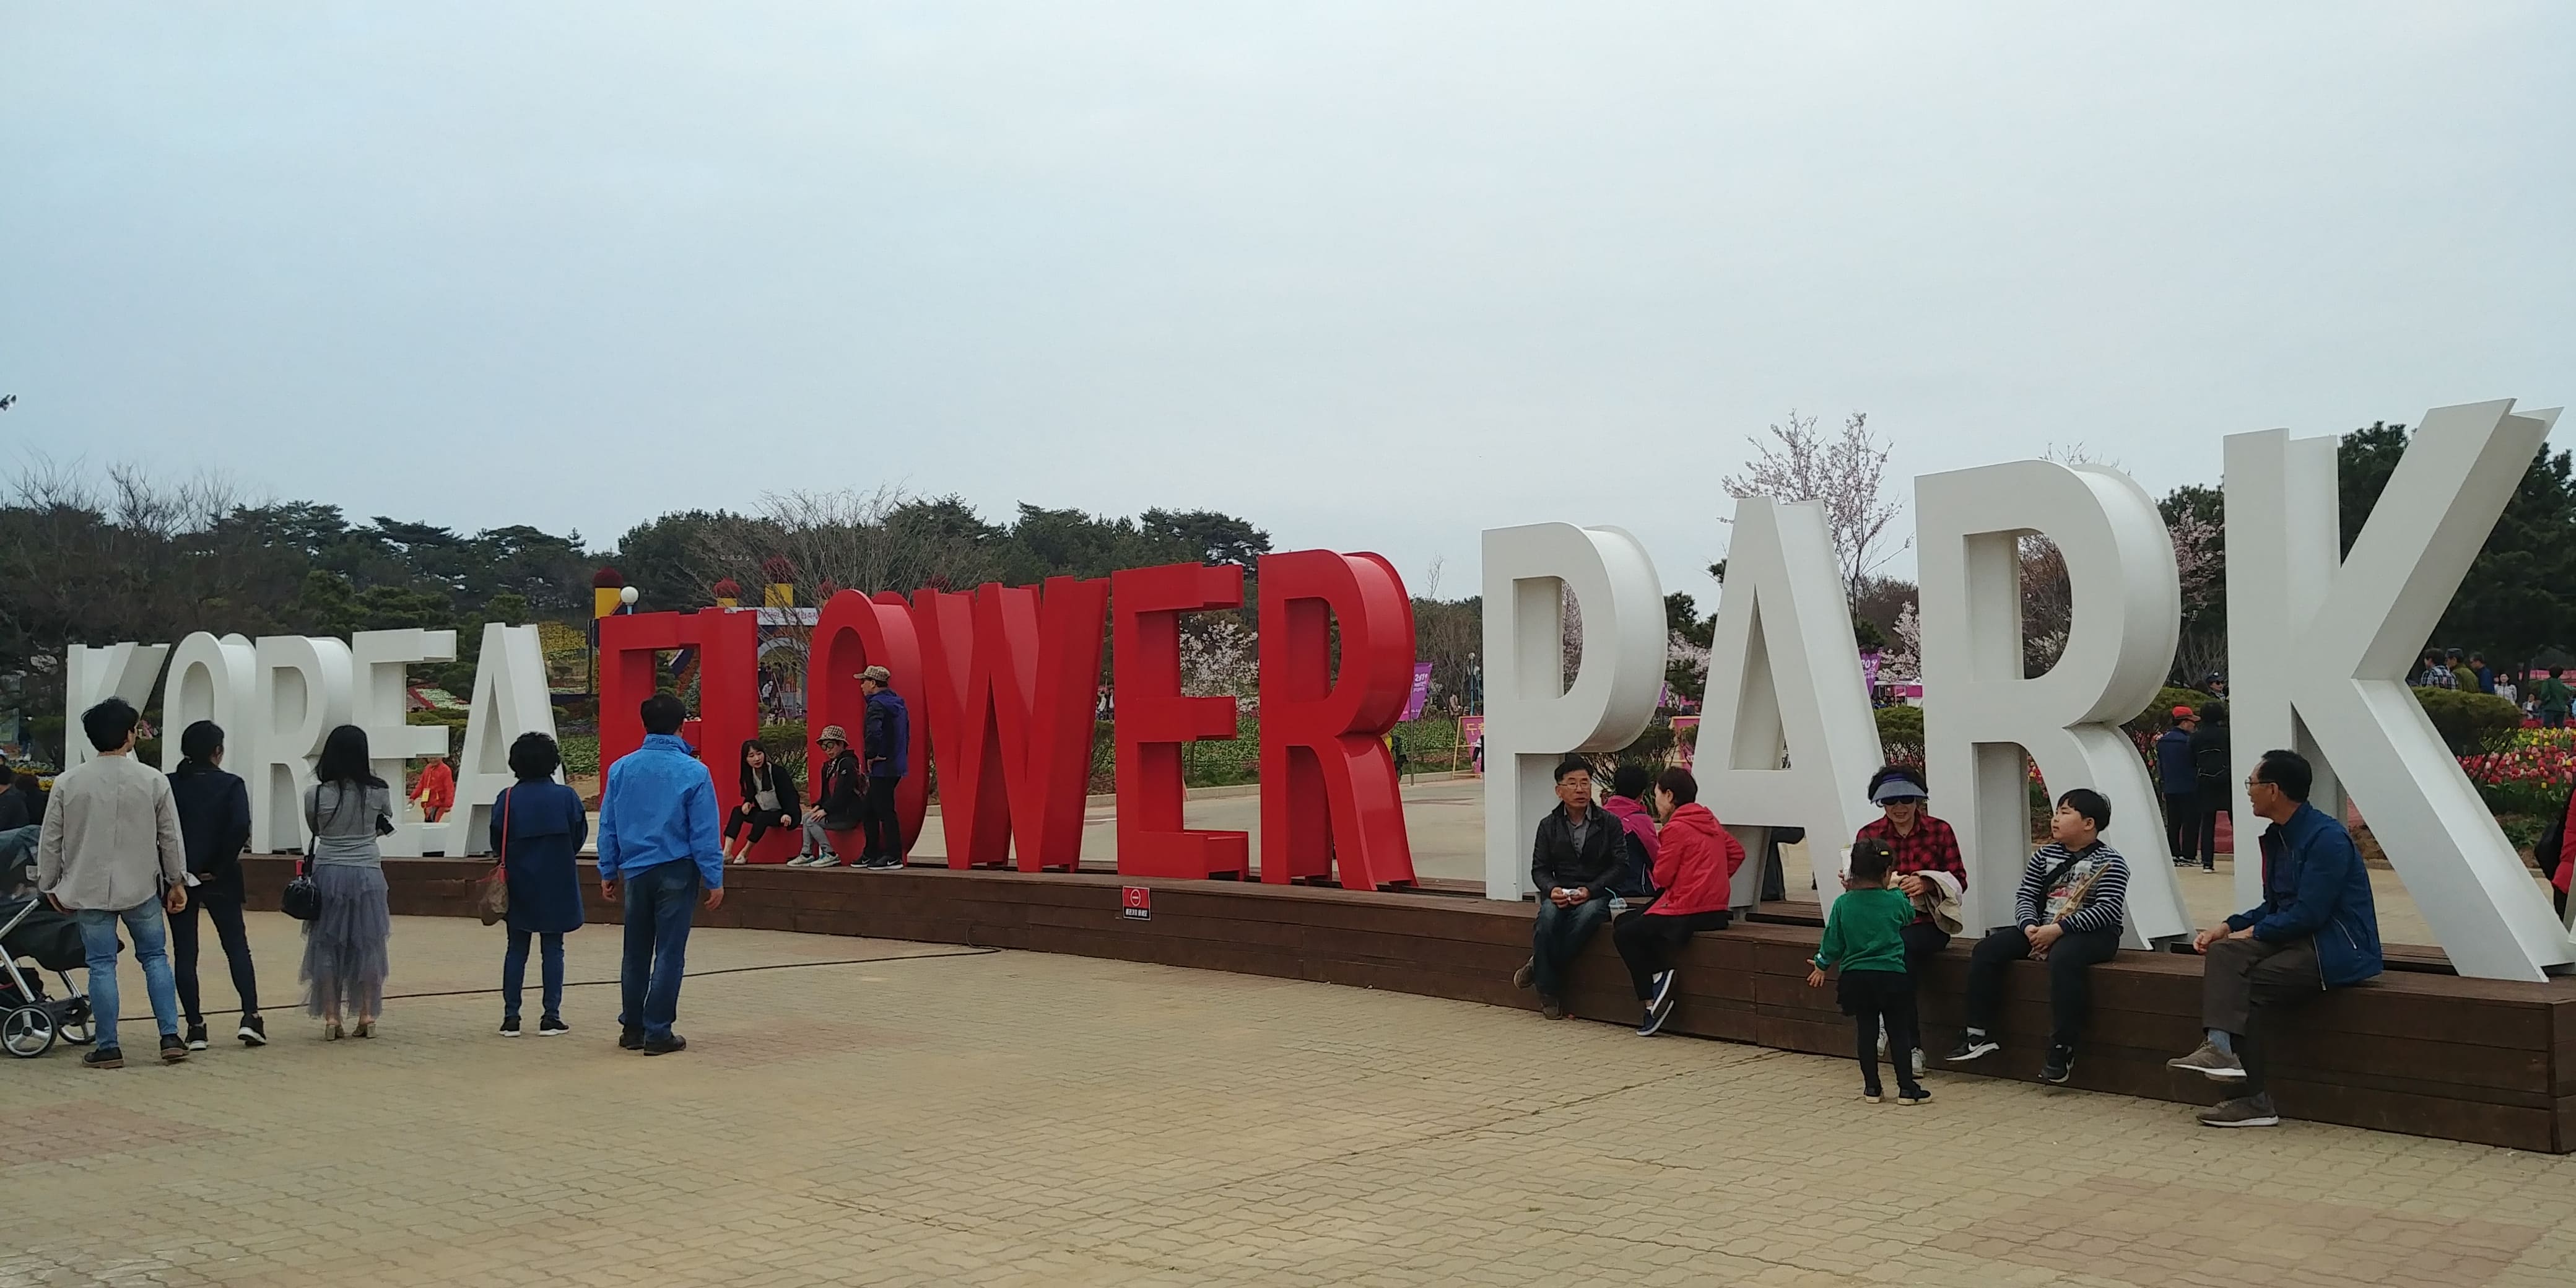 KOREA FLOWER PARK 이름이 크게 적혀 사진을 찍기 좋은 스폿